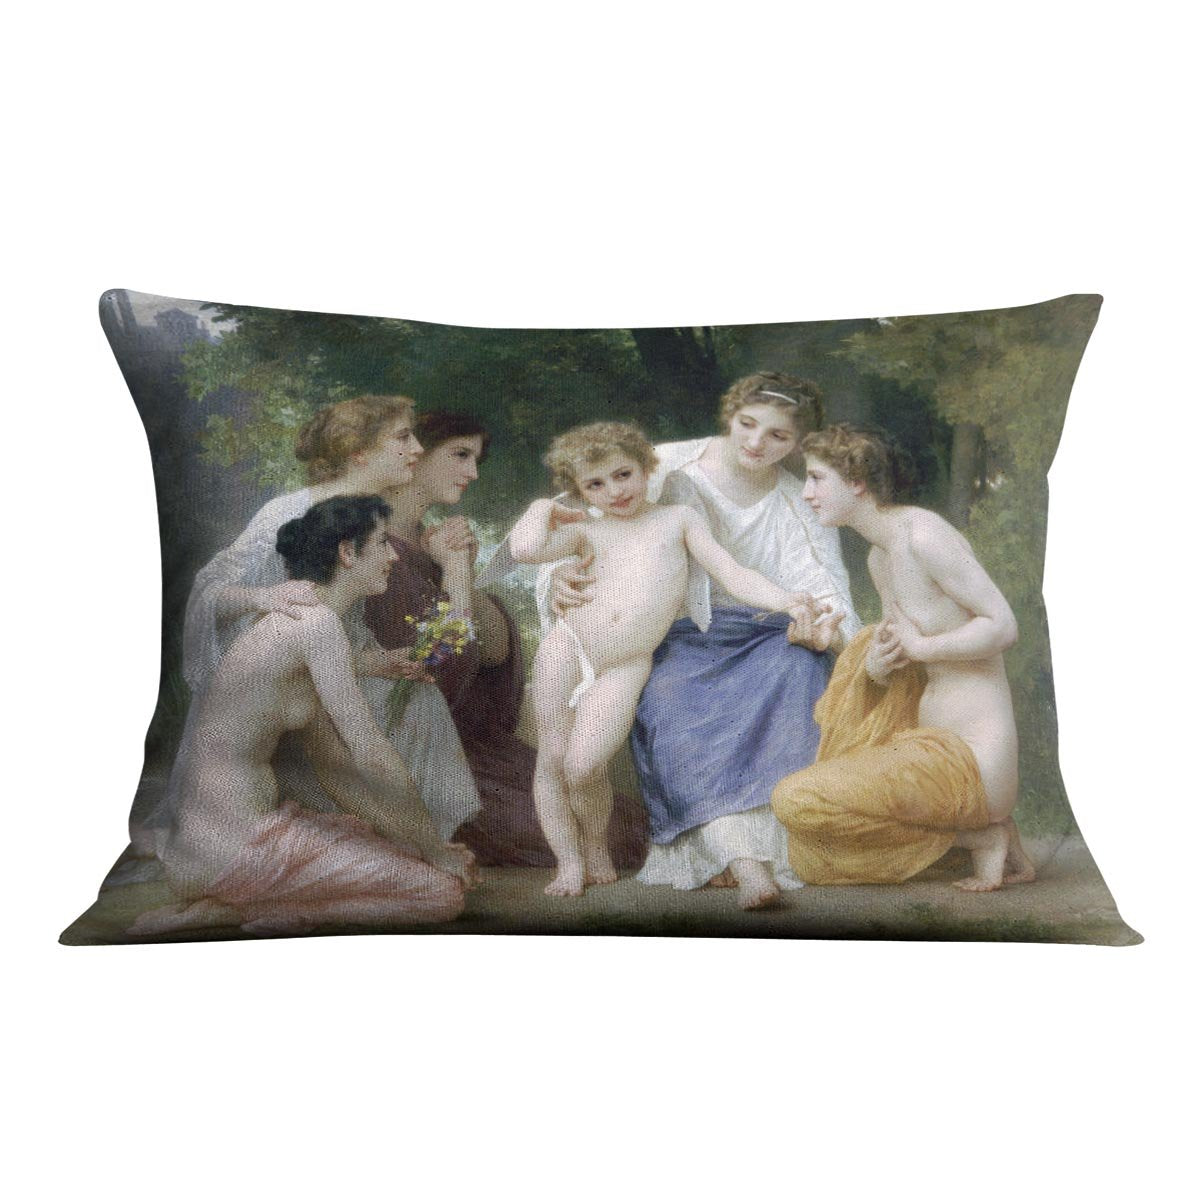 Admiration By Bouguereau Throw Pillow